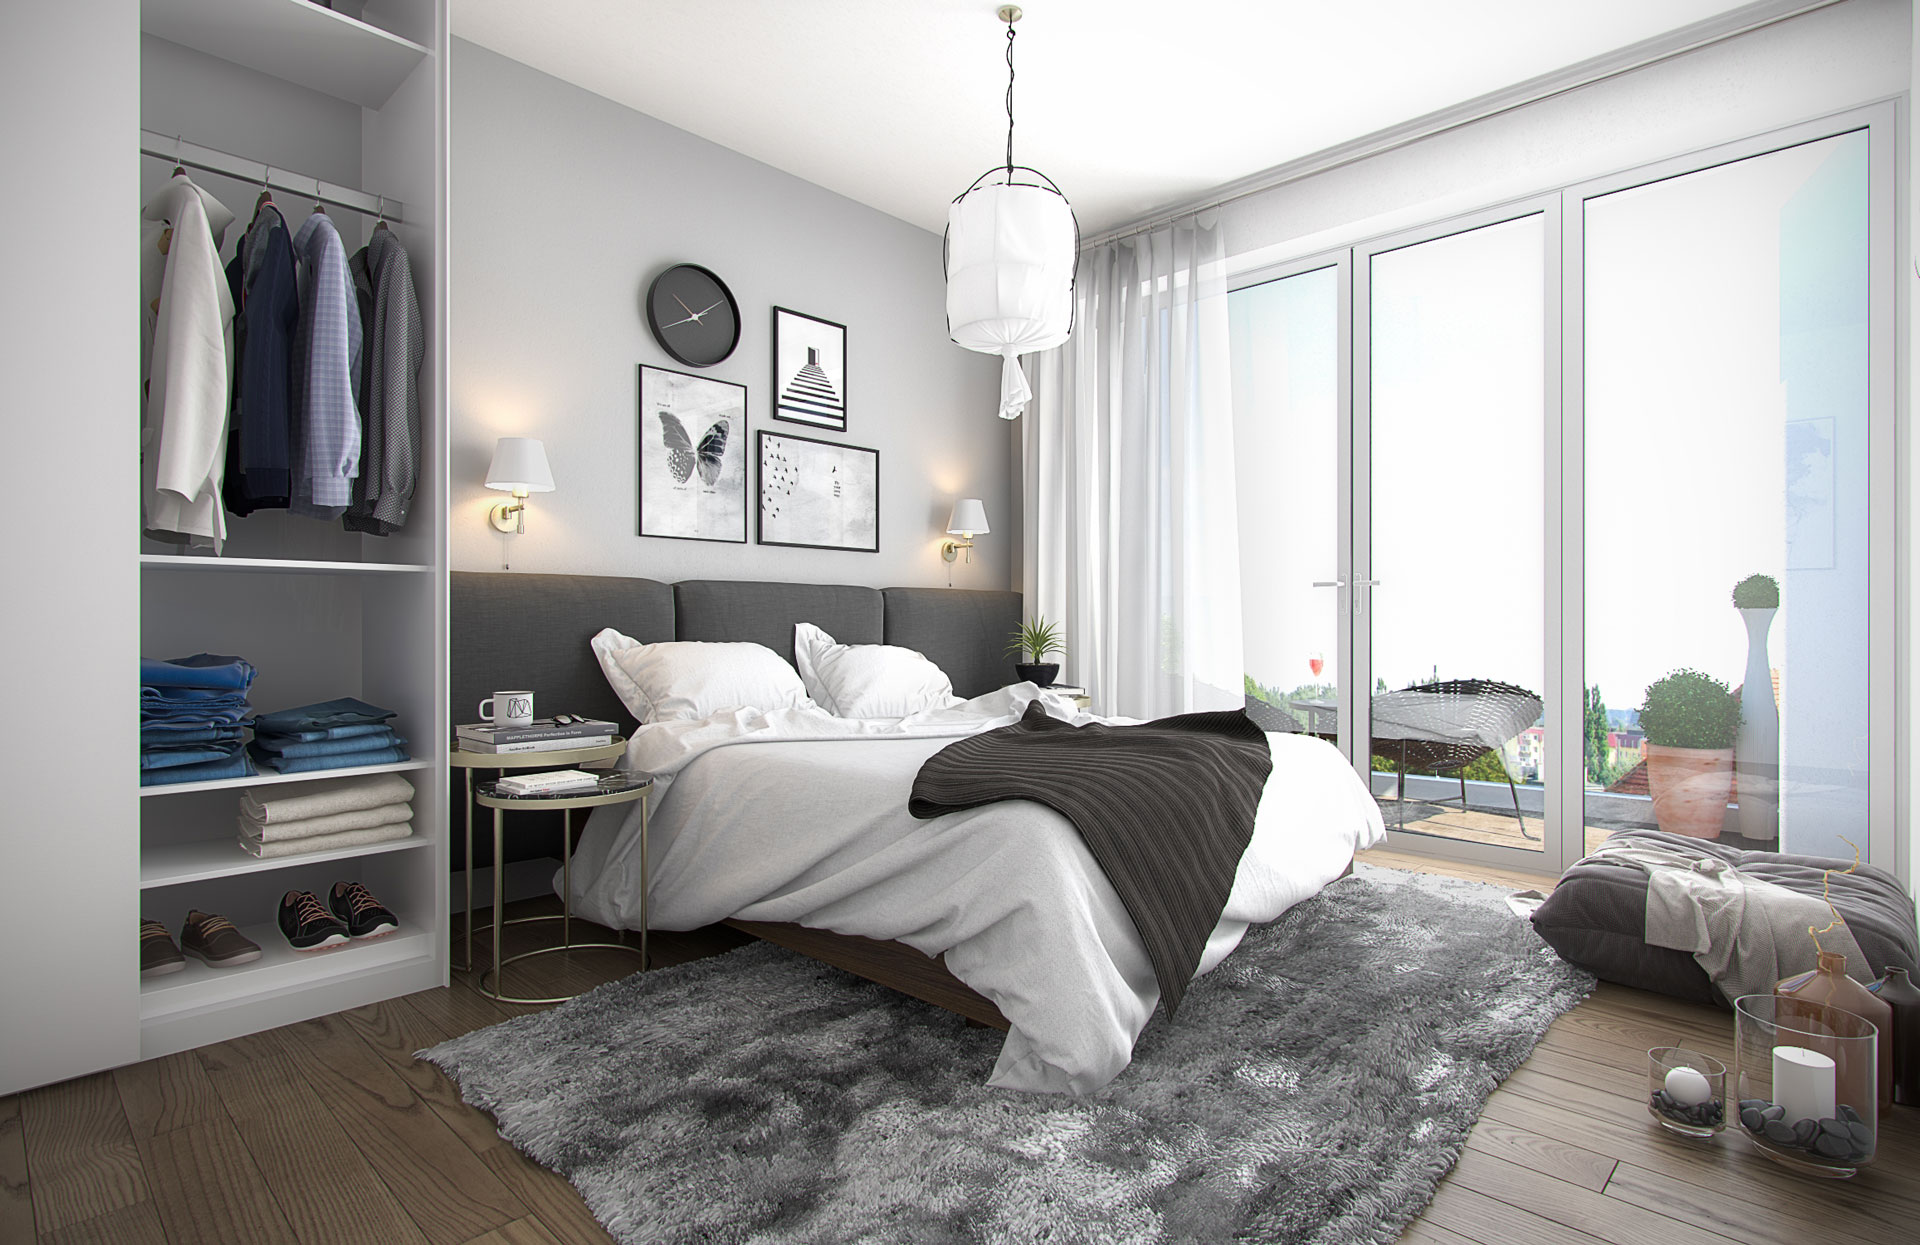 Apartment Bedroom Decor Pinterest